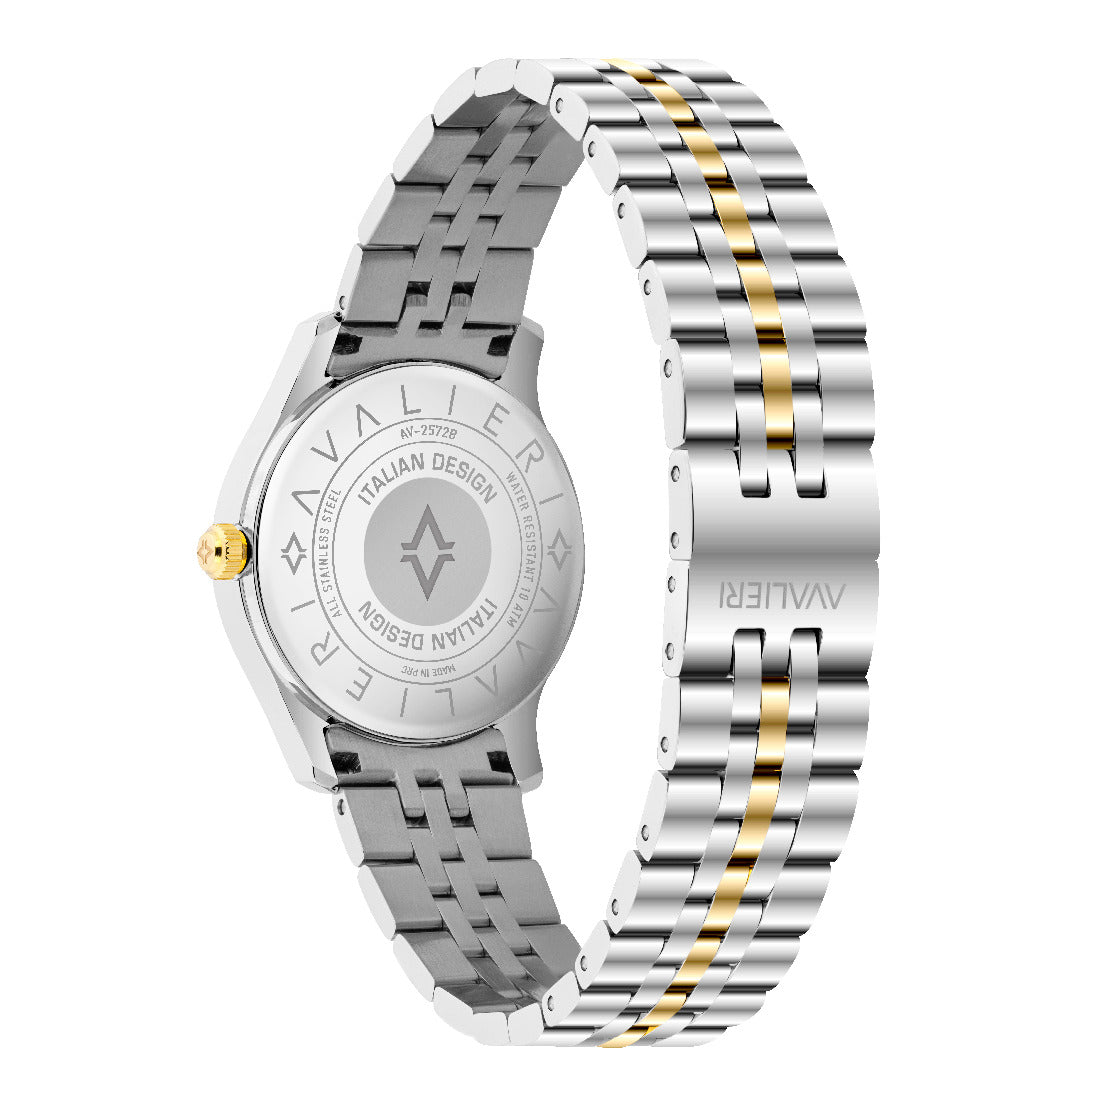 Avalieri Women's Quartz Watch Silver Dial - AV-2572B